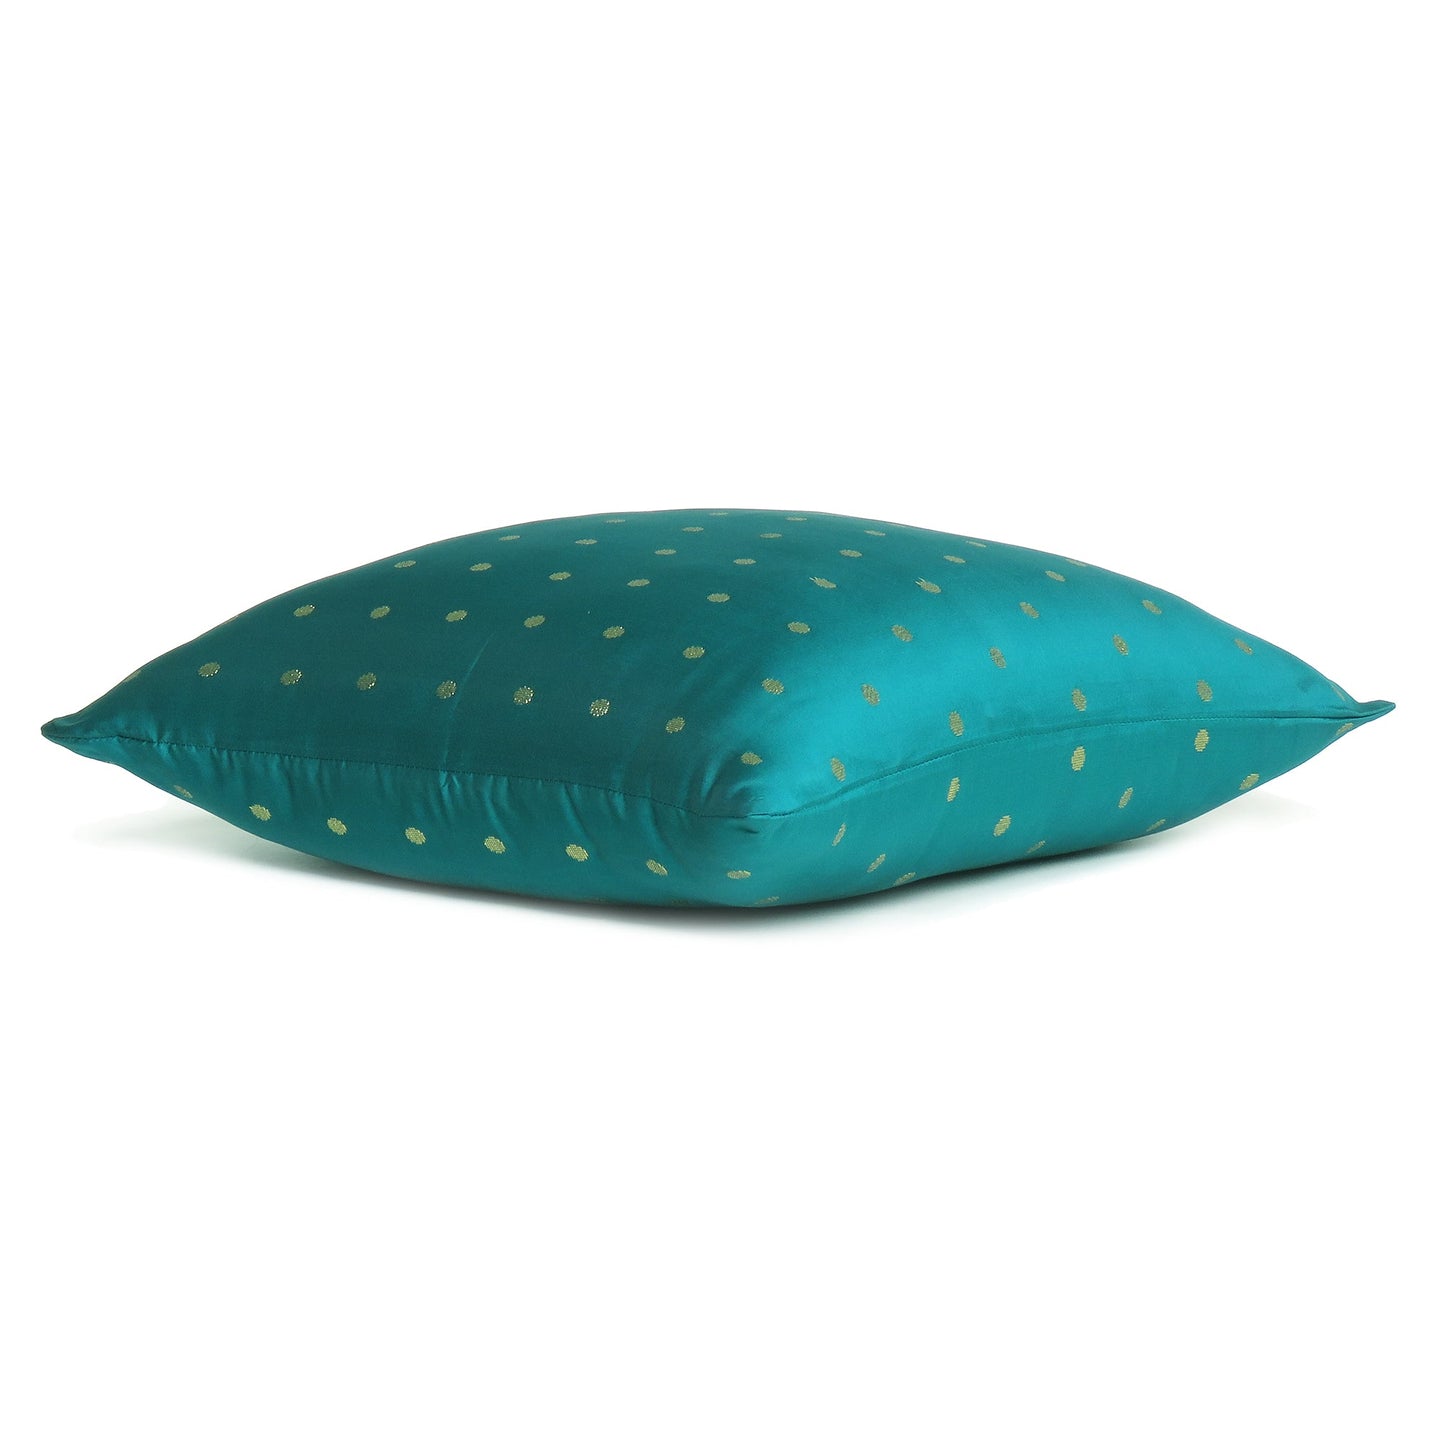 Cyan Blue Polka Dot Cushion Cover in Set of 2